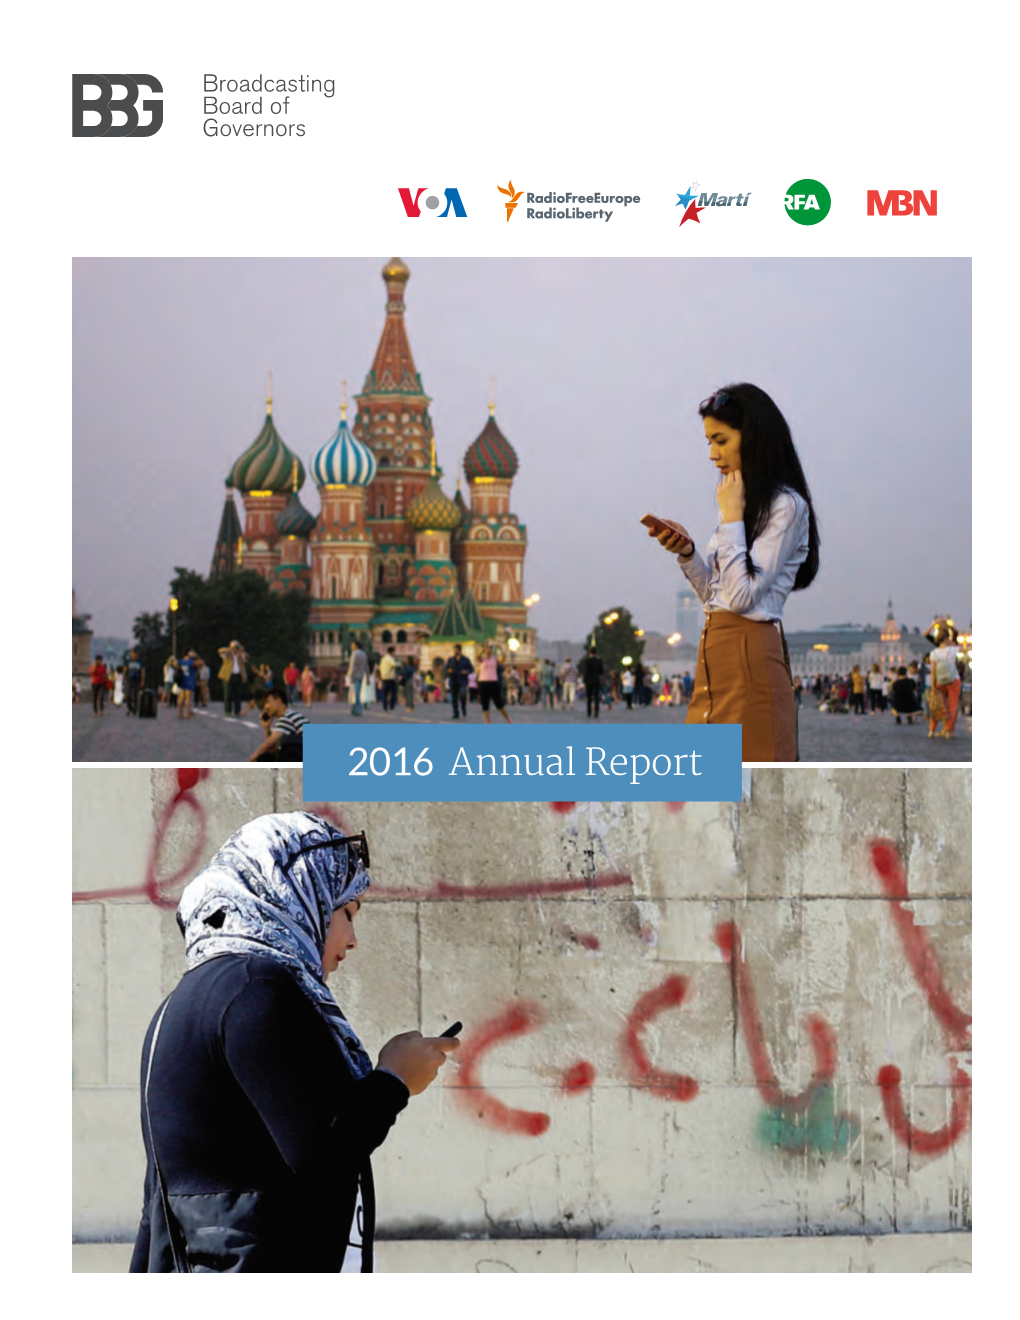 BBG 2016 Annual Report